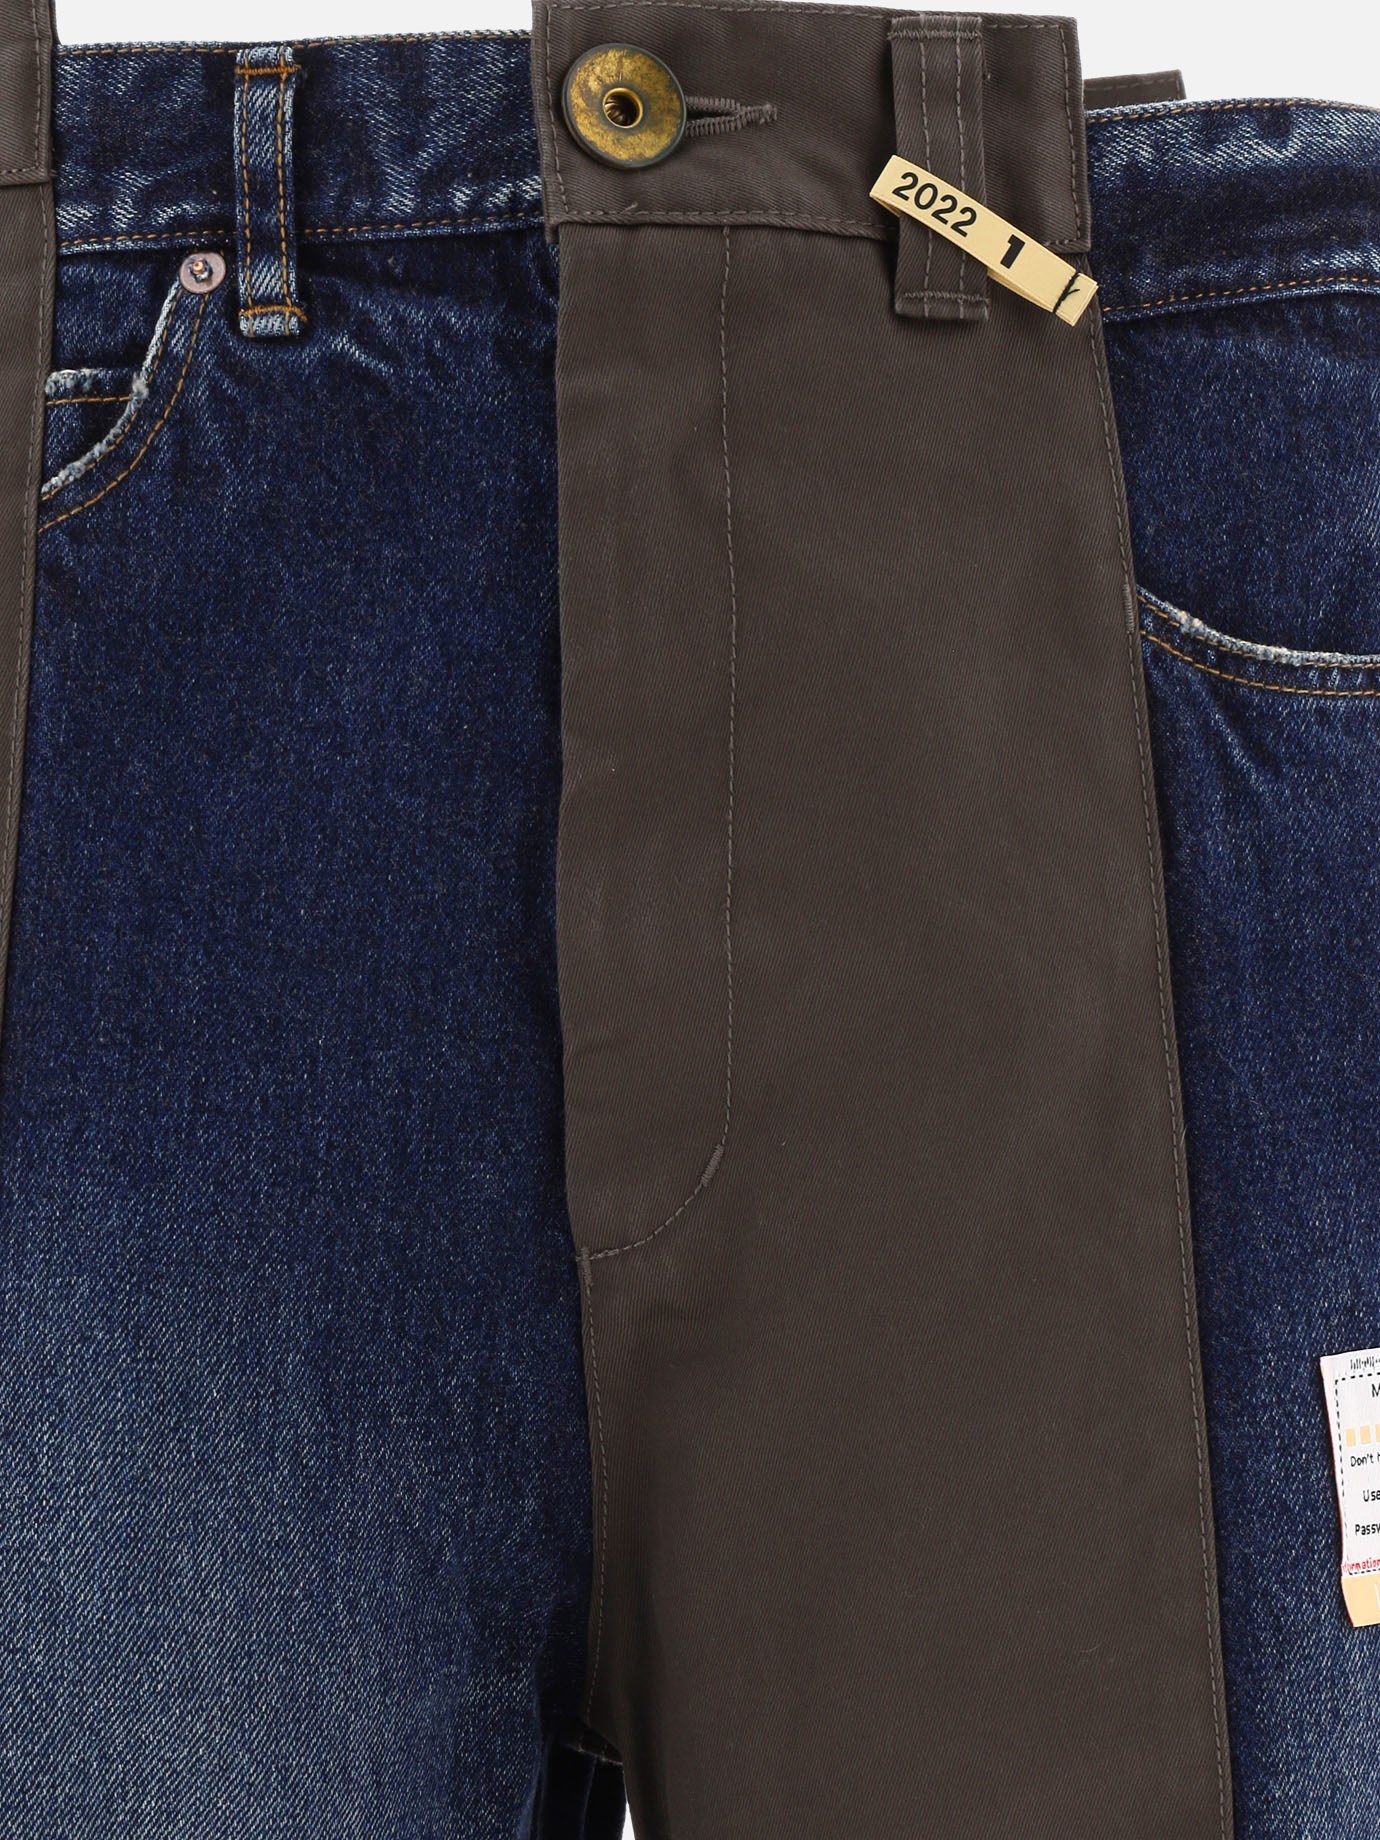 Jeans  Panel Combined  by Maison Mihara Yasuhiro